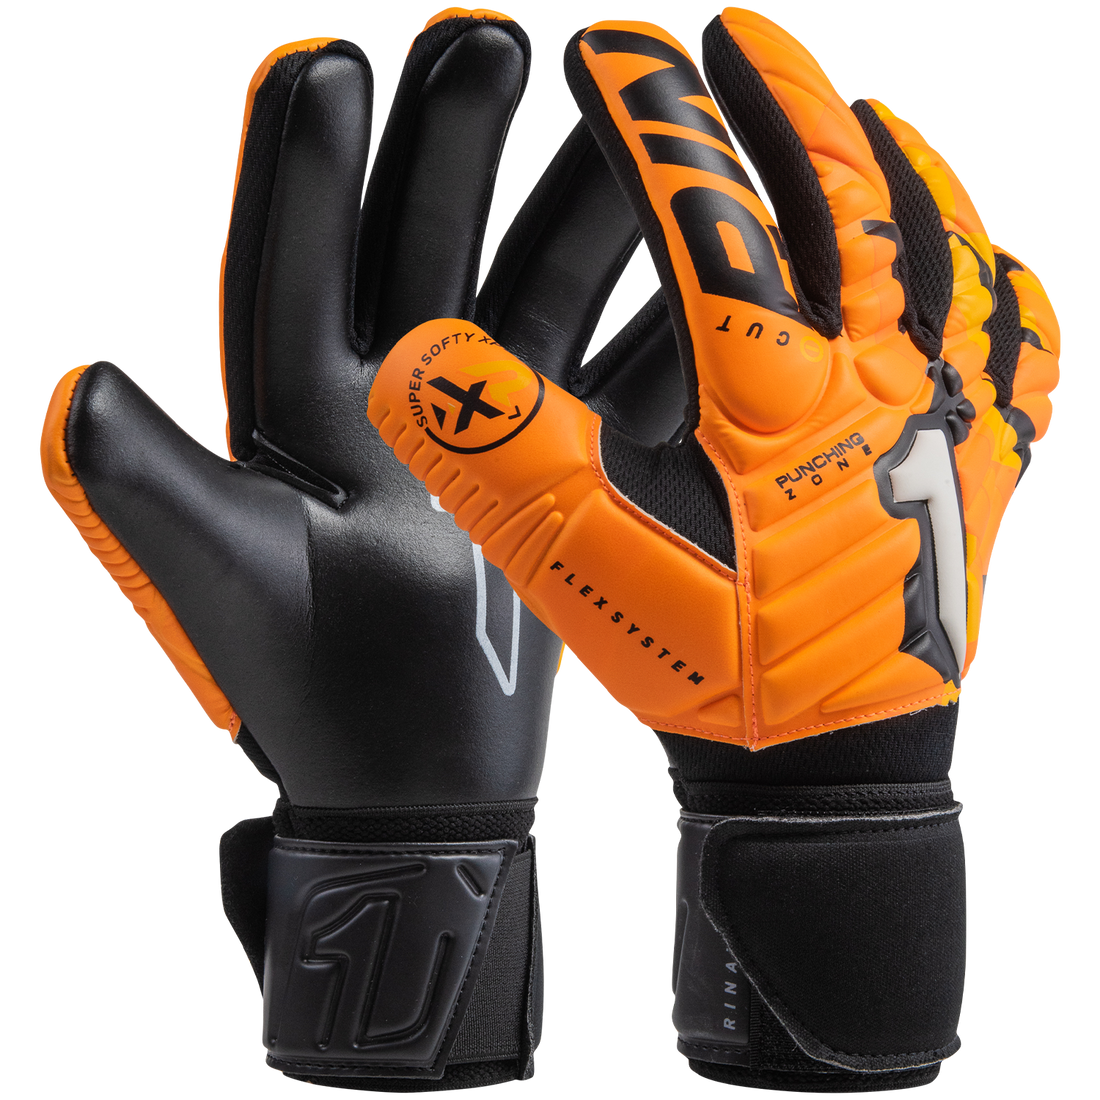 Rinat Meta Tactik SPINES (Finger Protection) Goalkeeper Glove